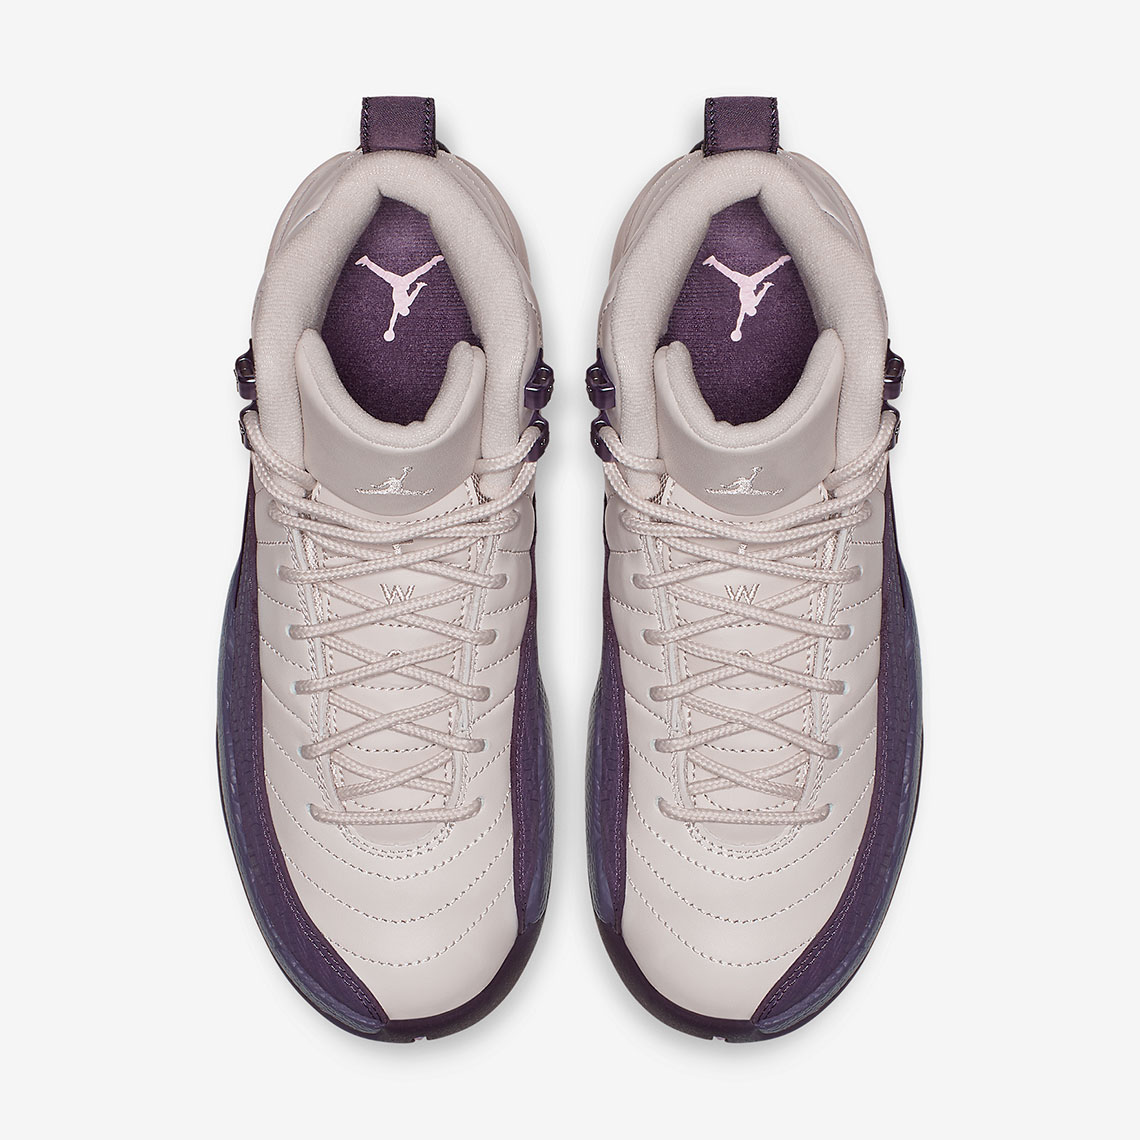 Jordan 12 Pro Purple - Where To Buy / Release Info | SneakerNews.com